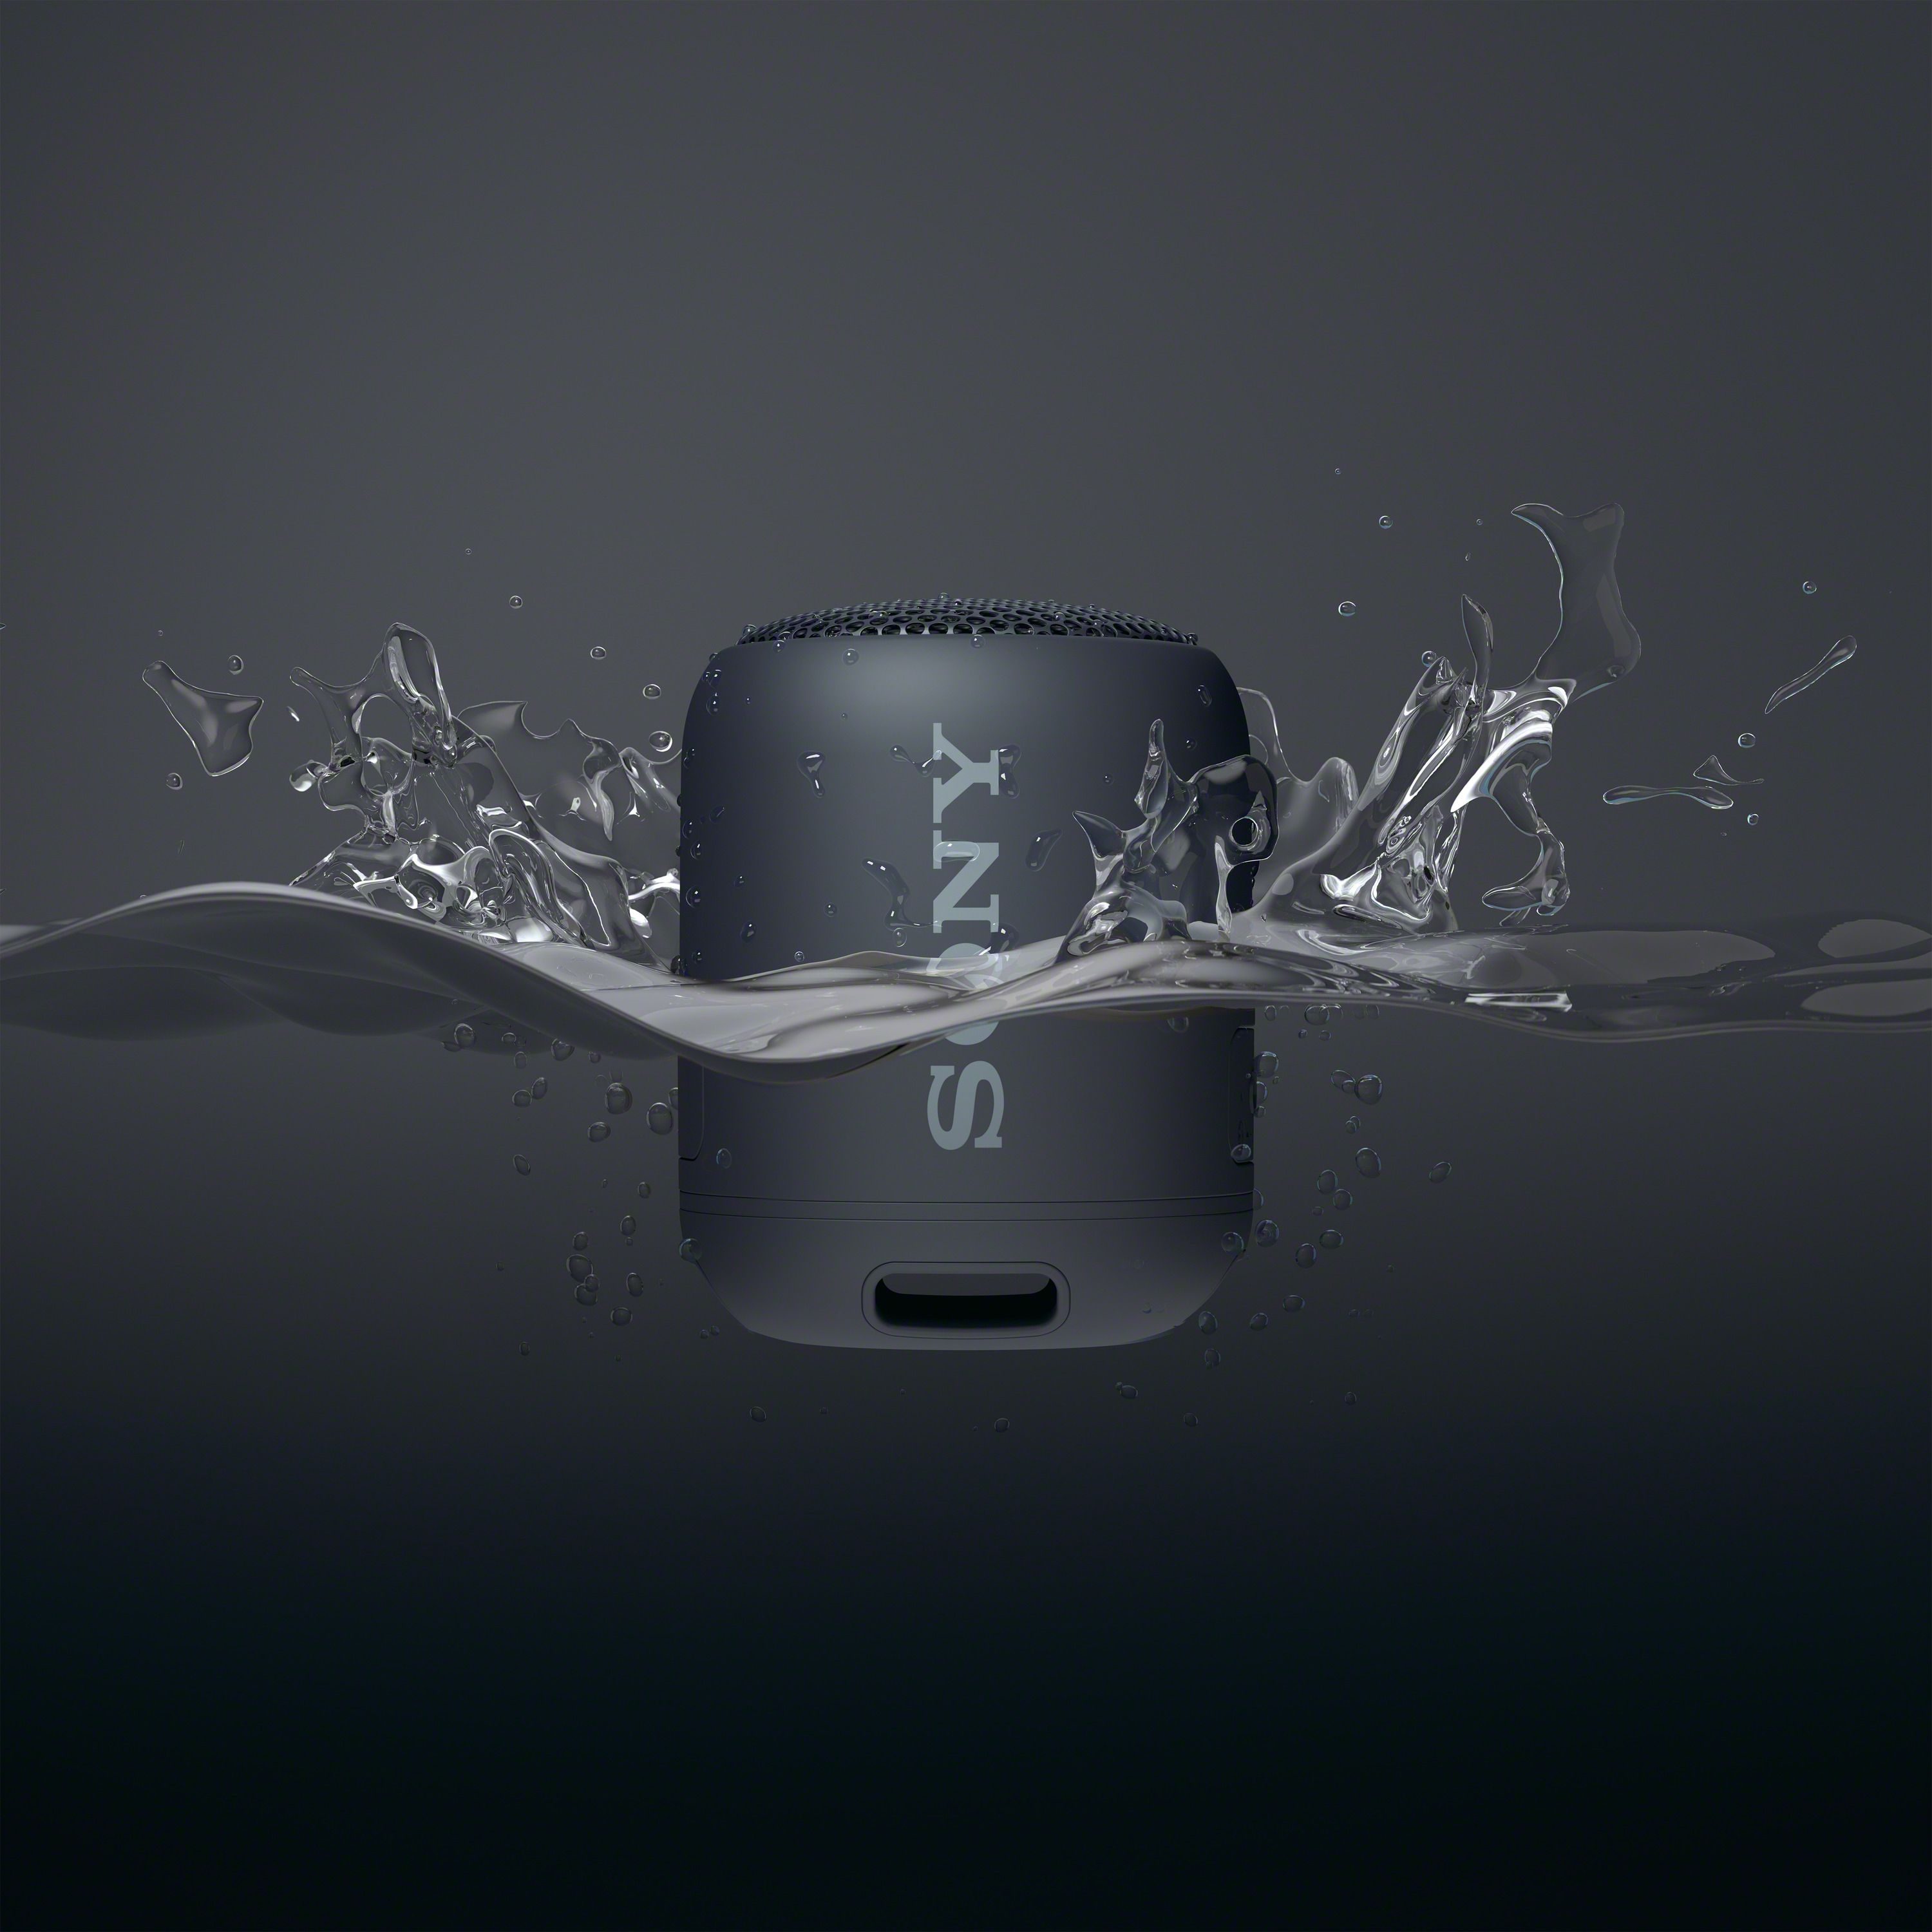 Sony Portable Bluetooth Speaker, Black, SRSXB12/BMC4 - image 2 of 7